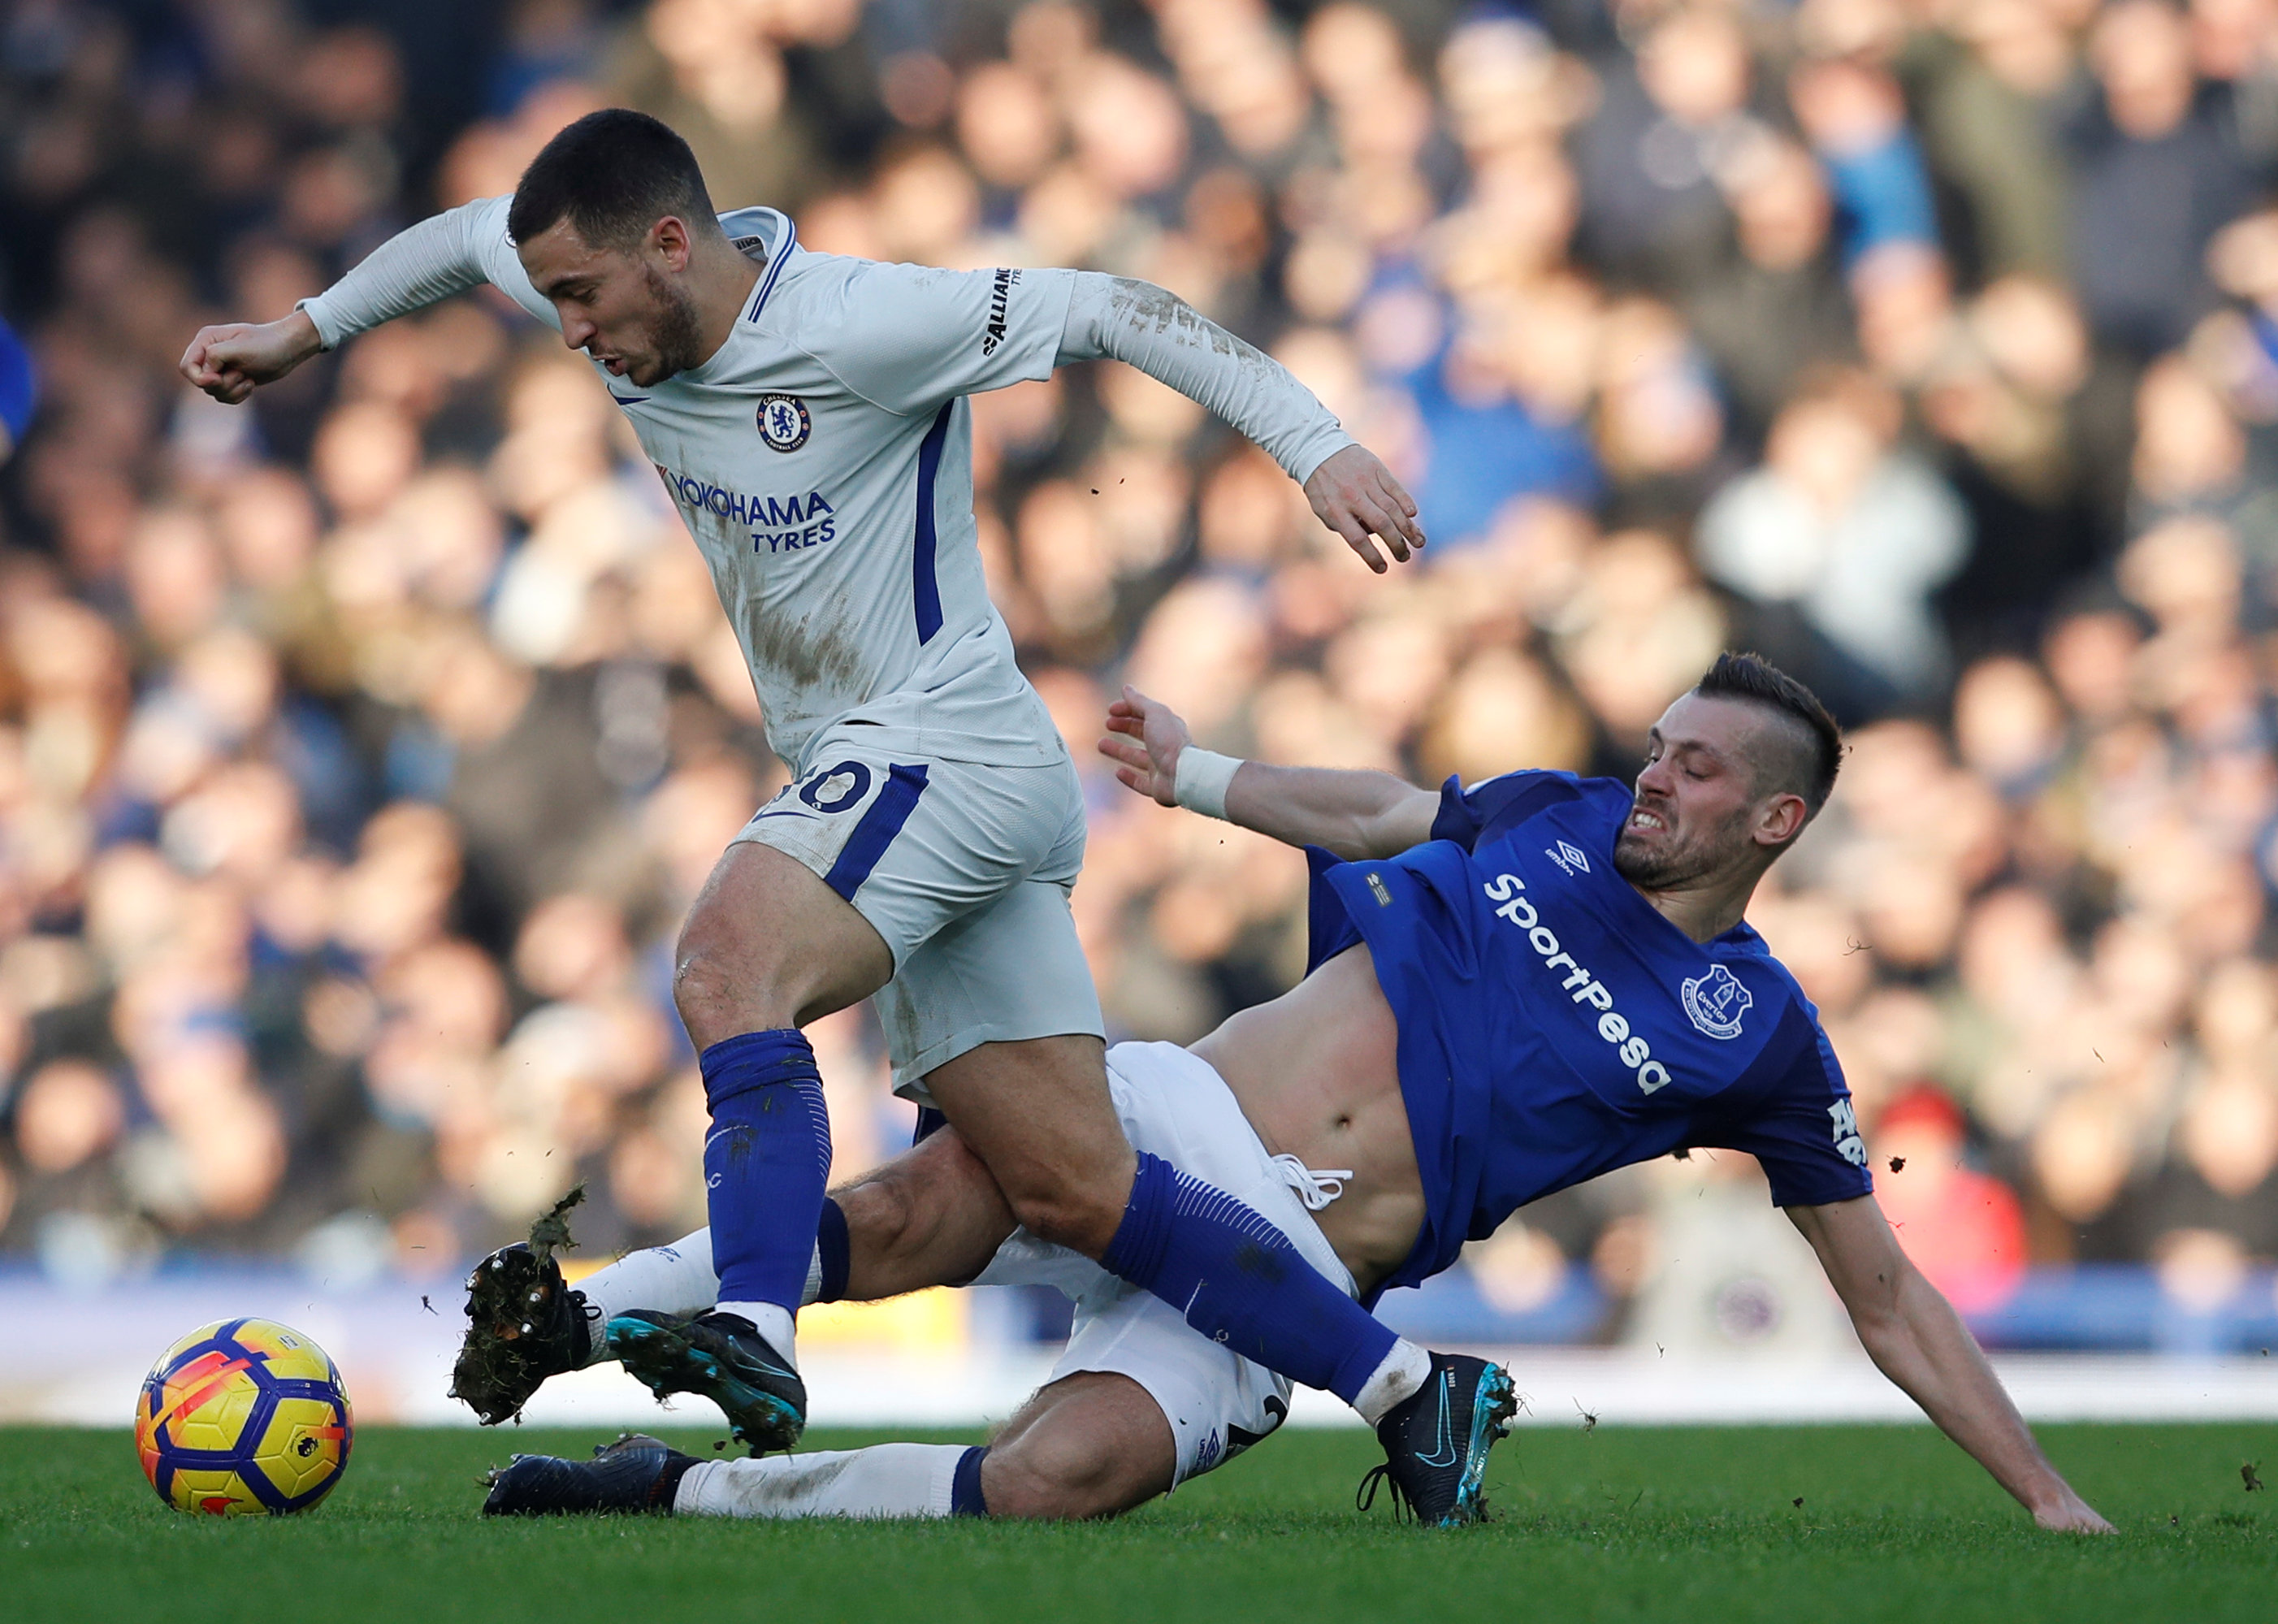 Football: Everton hold Chelsea to goalless draw